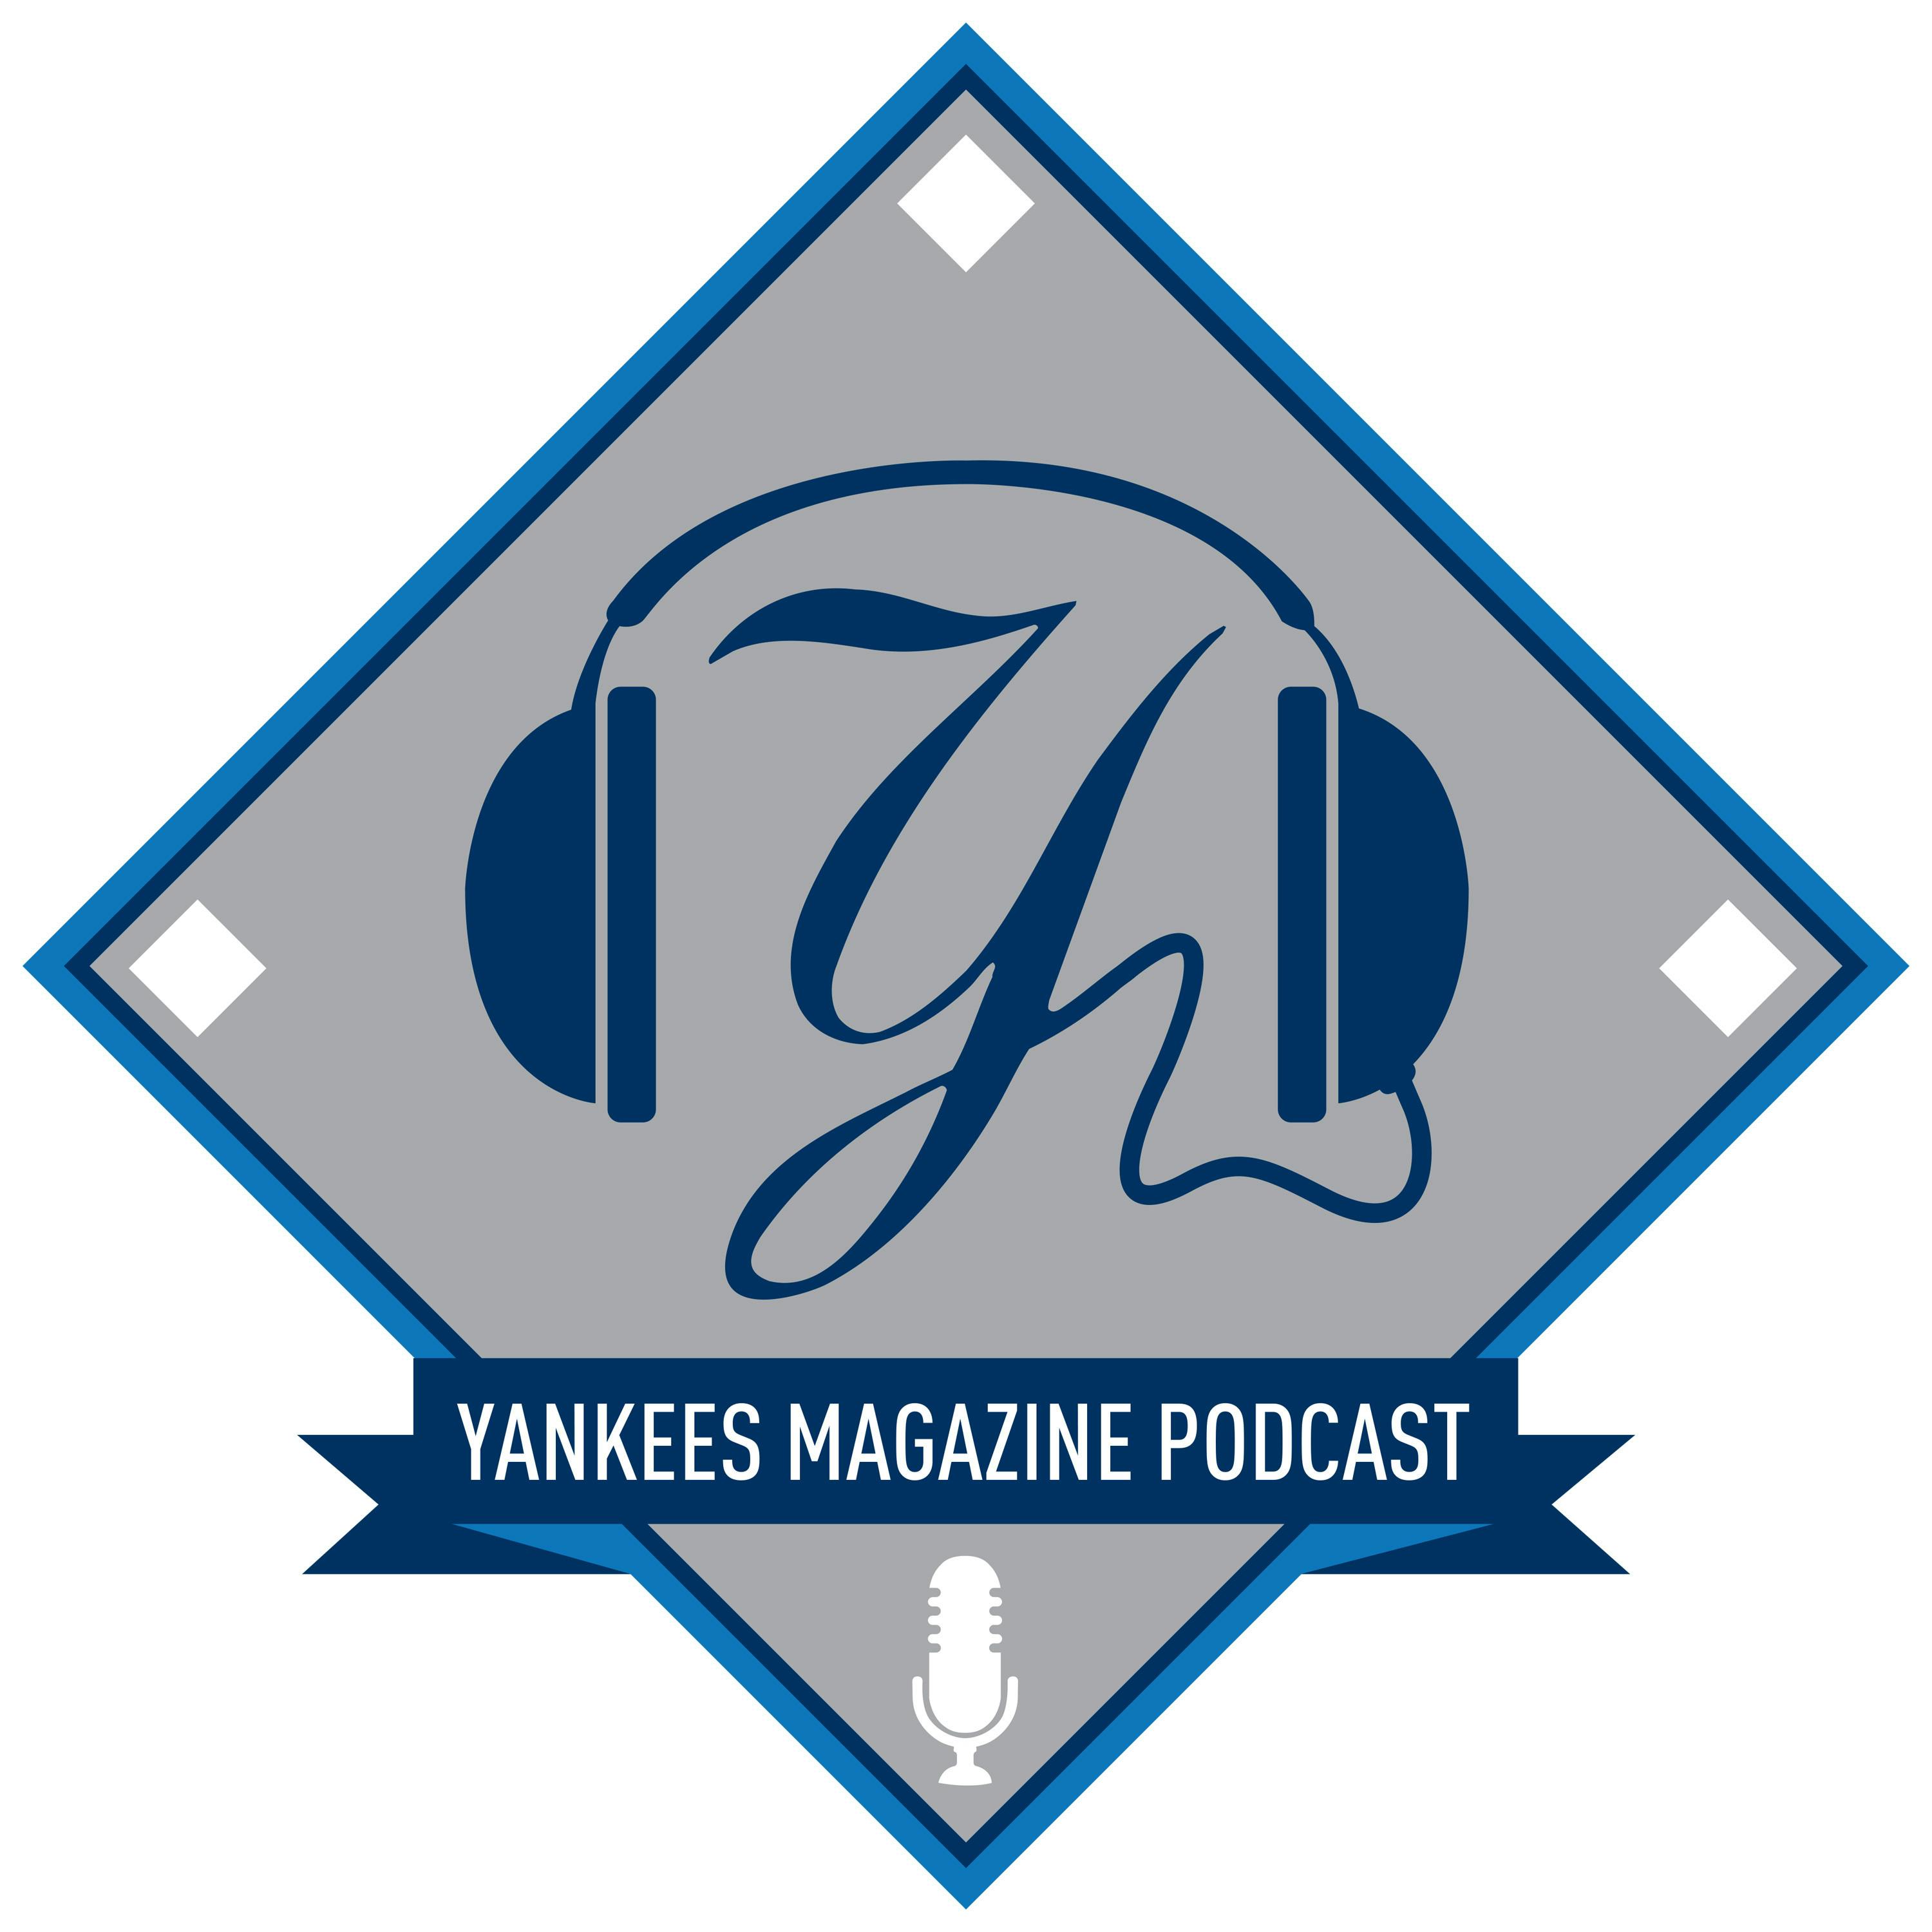 Yankees Magazine Podcast, Season 4, Episode 19, Episode Title: El Marciano